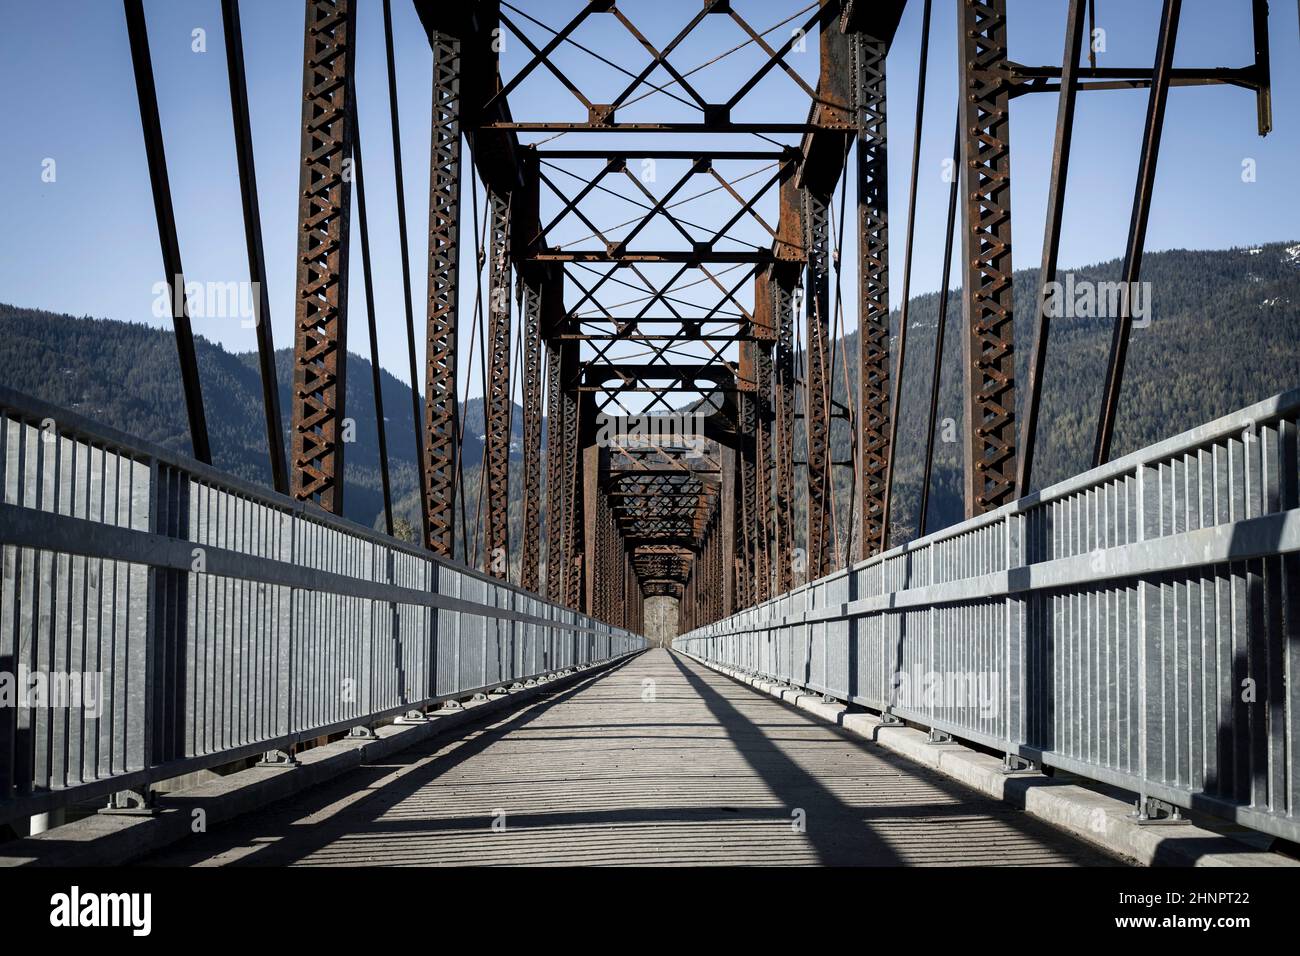 An old steel bridge repurposed into a walking path near Clark Fork, Idaho. Stock Photo